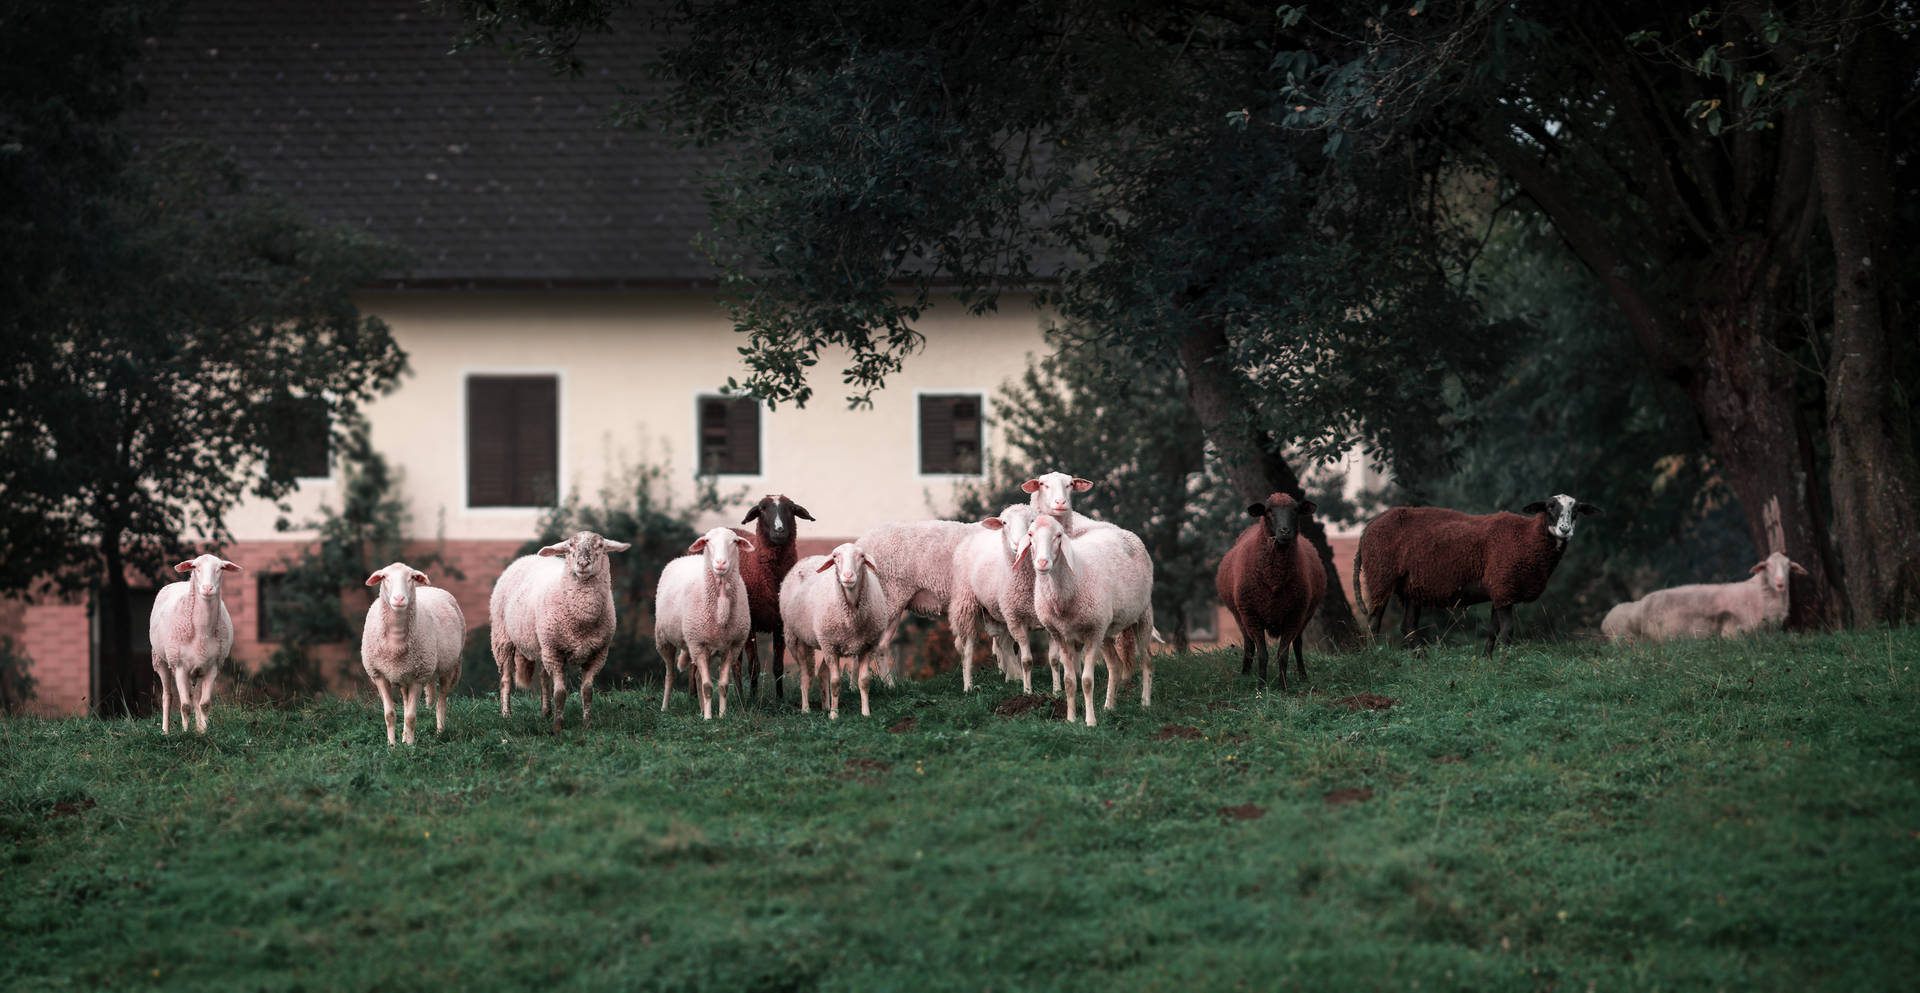 Herd Of Sheep In Backyard